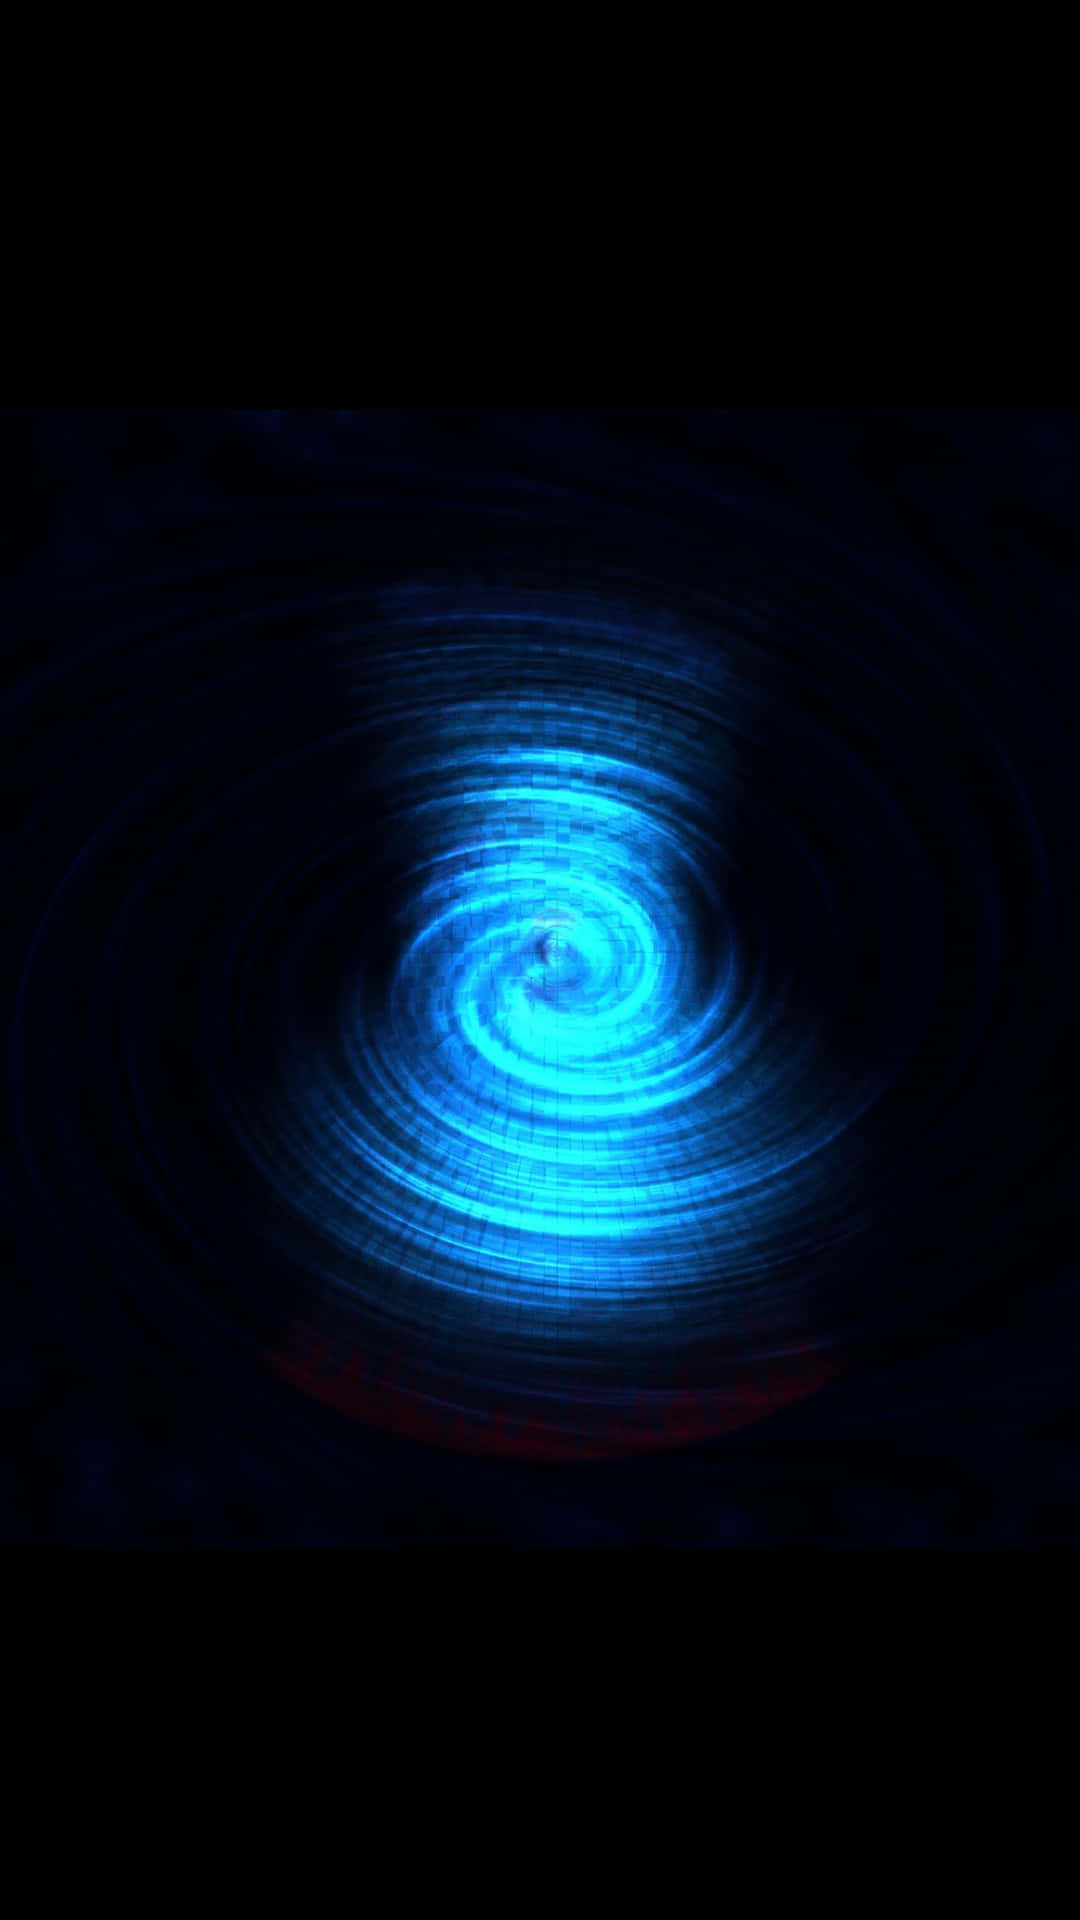 Enblå Spiral Med Ett Blått Ljus